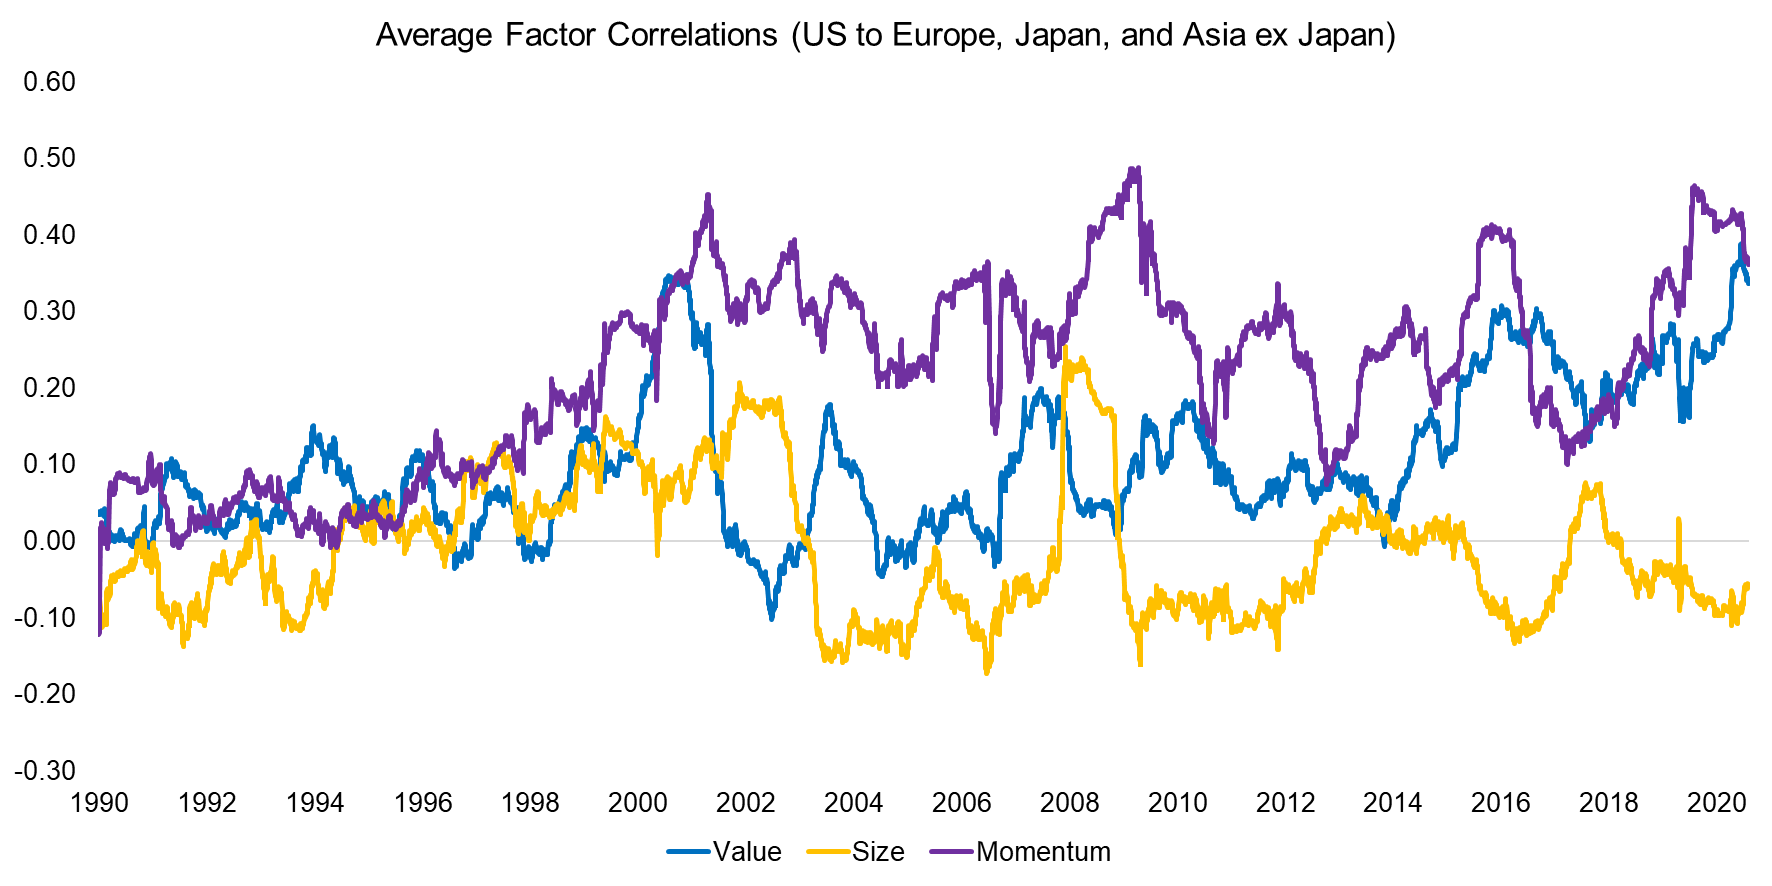 Average Factor Correlations across Markets (US, Europe, Japan, Asia ex Japan)